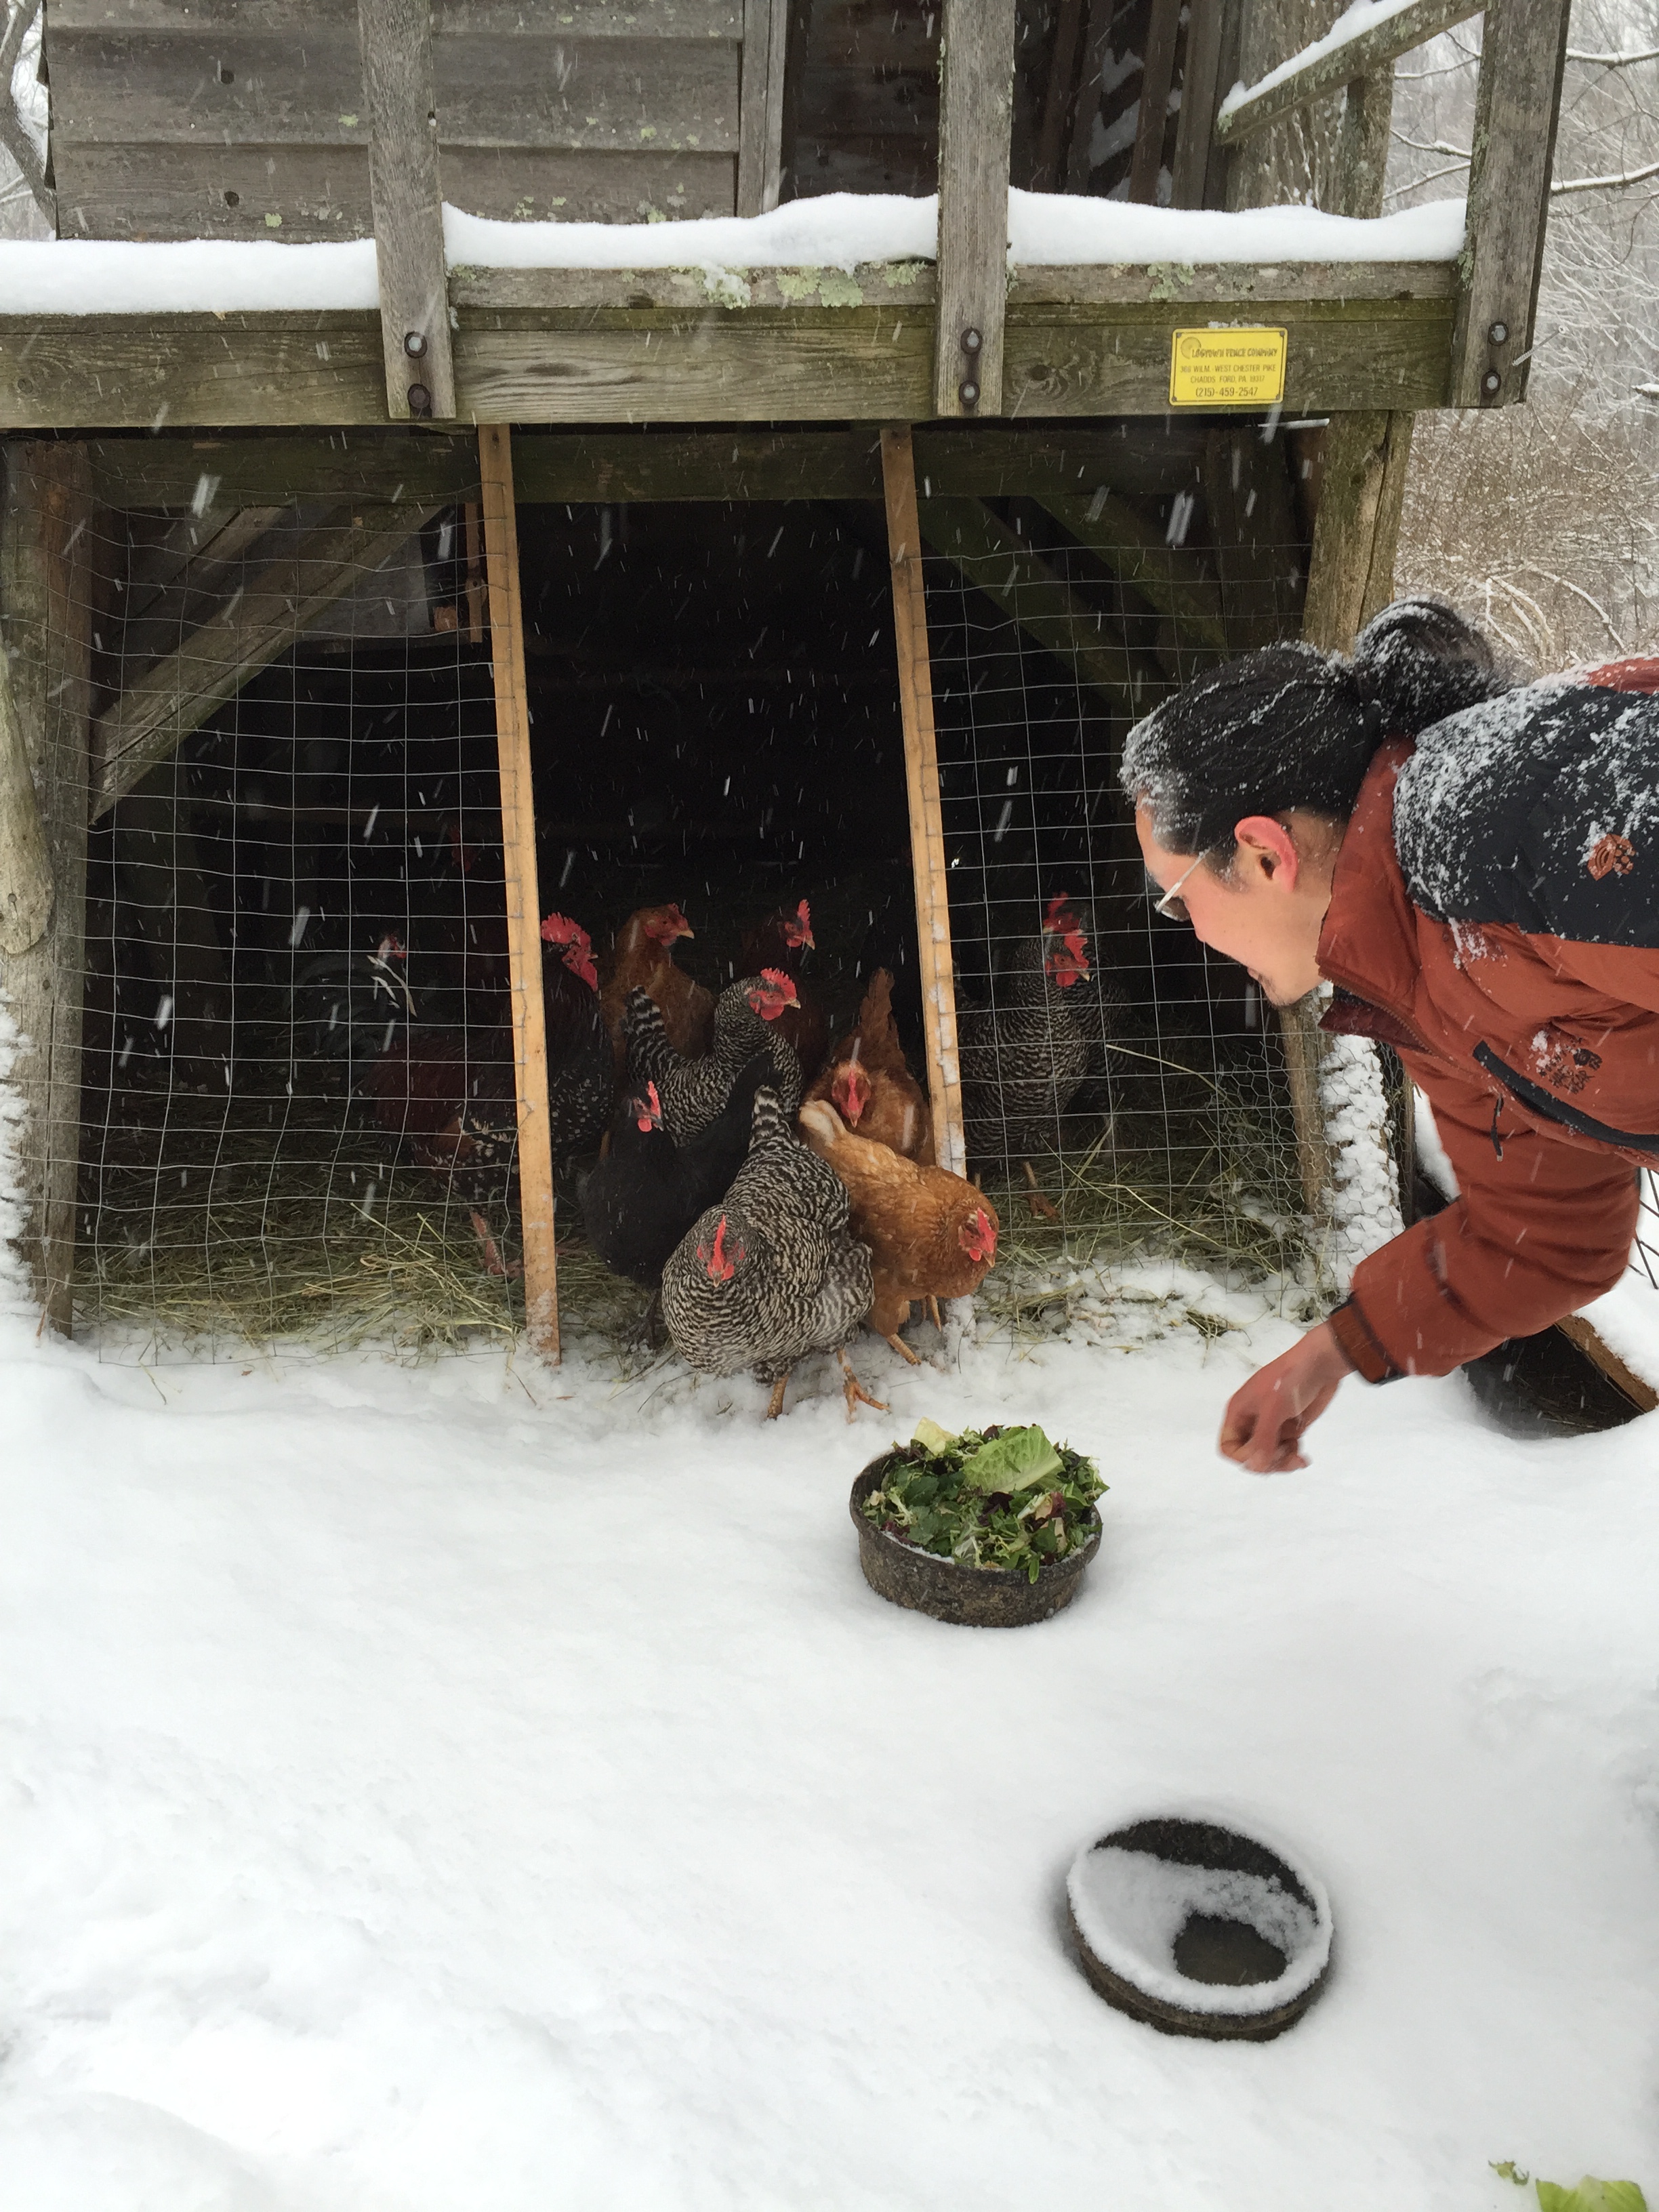  feeding the chickens 